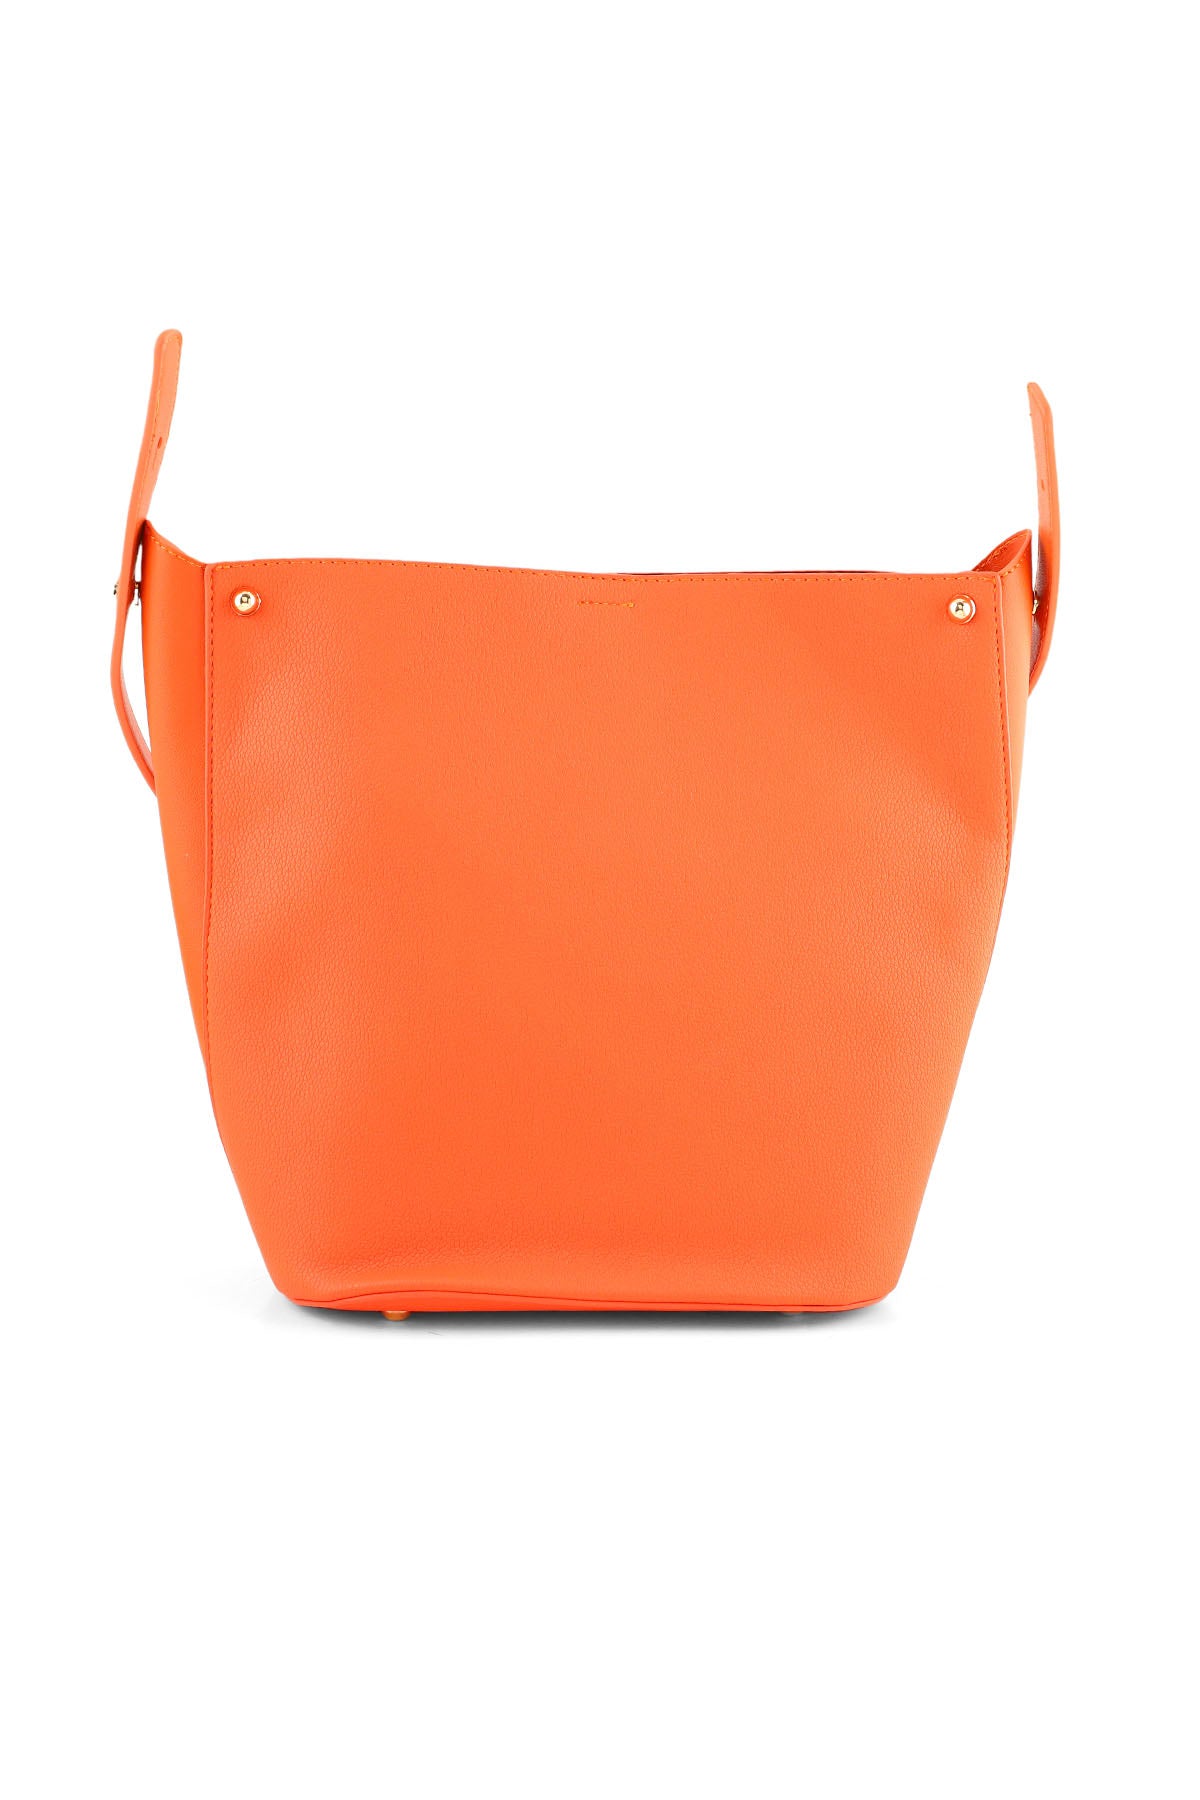 Bucket Hand Bags B15134-Orange